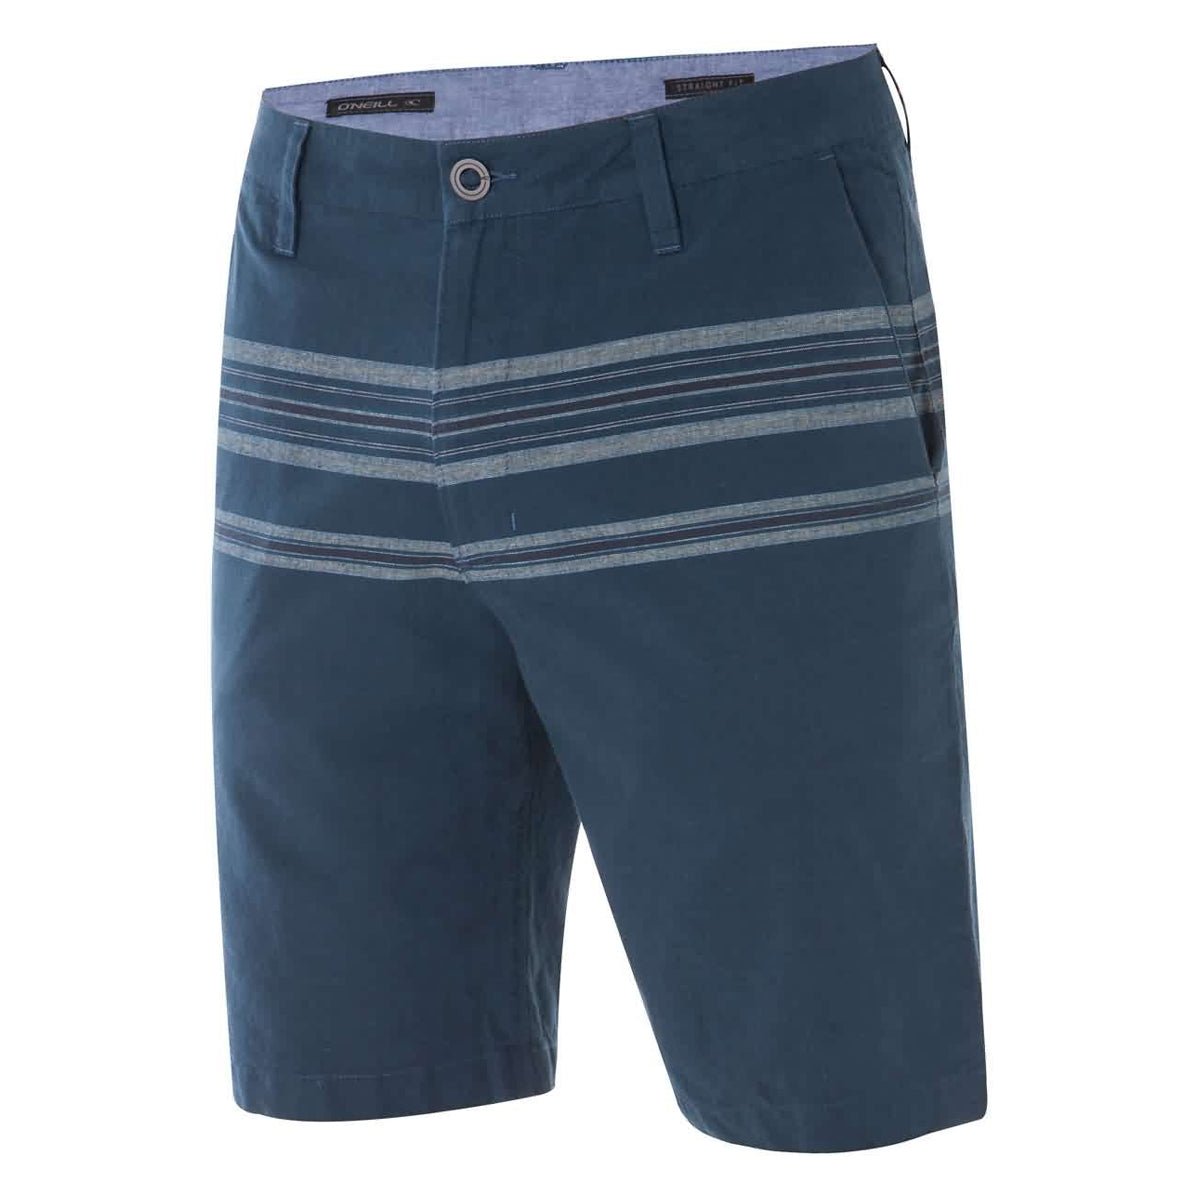 O'Neill Treehorn Stripe Men's Walkshort Shorts